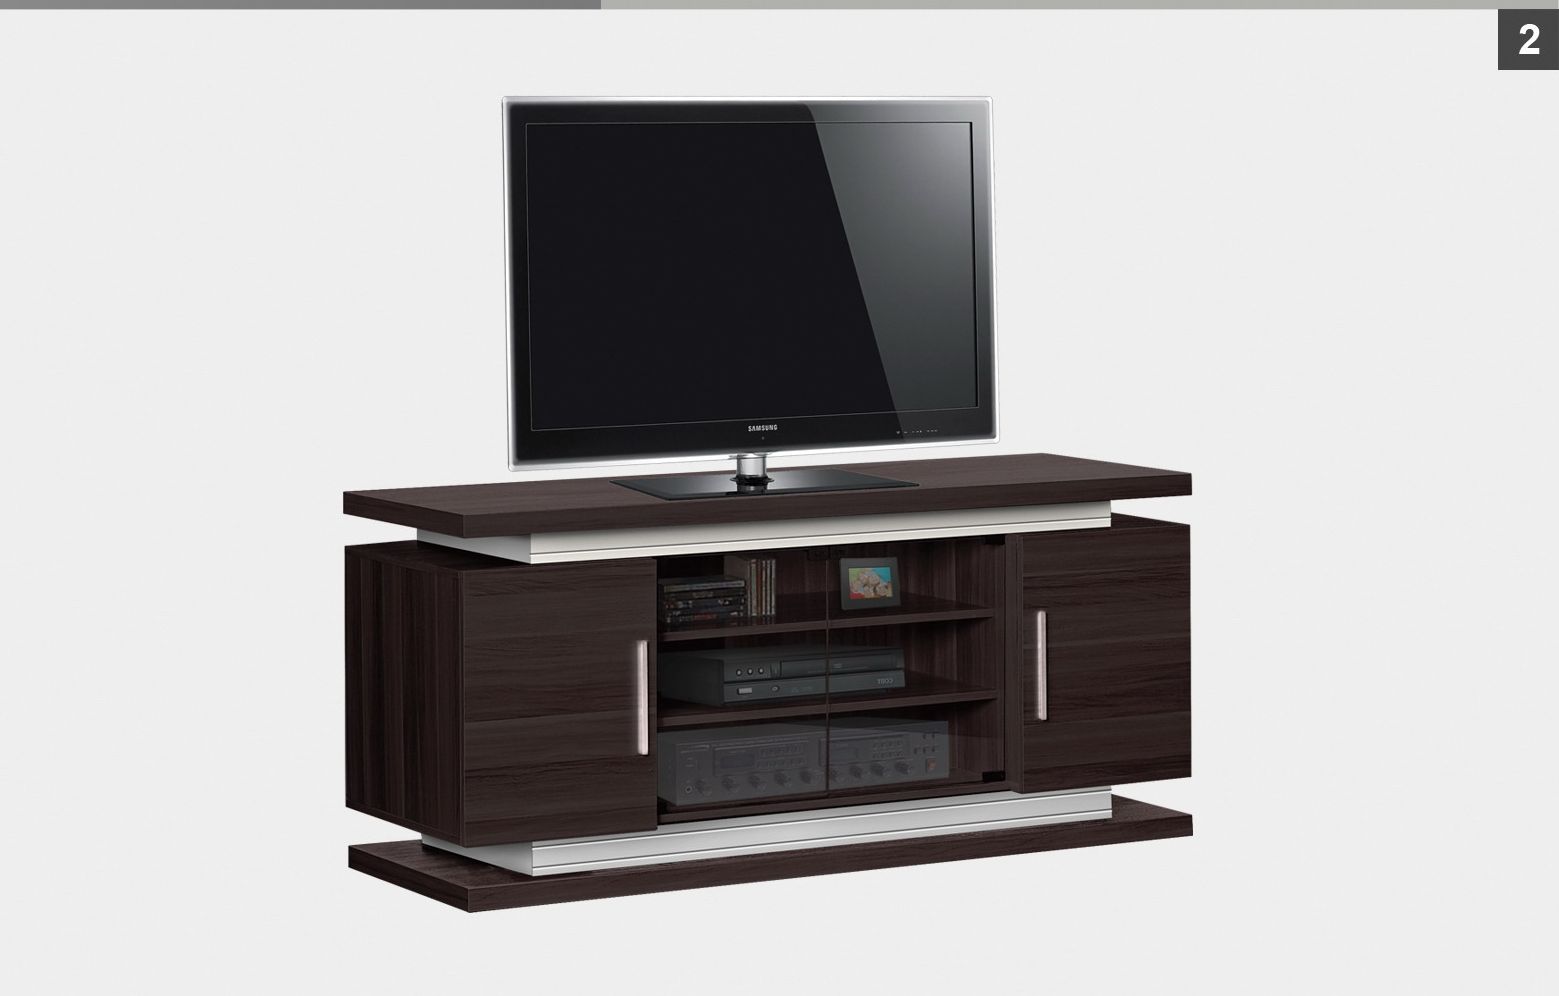  Rak  TV Score VR023 Furniture Collections